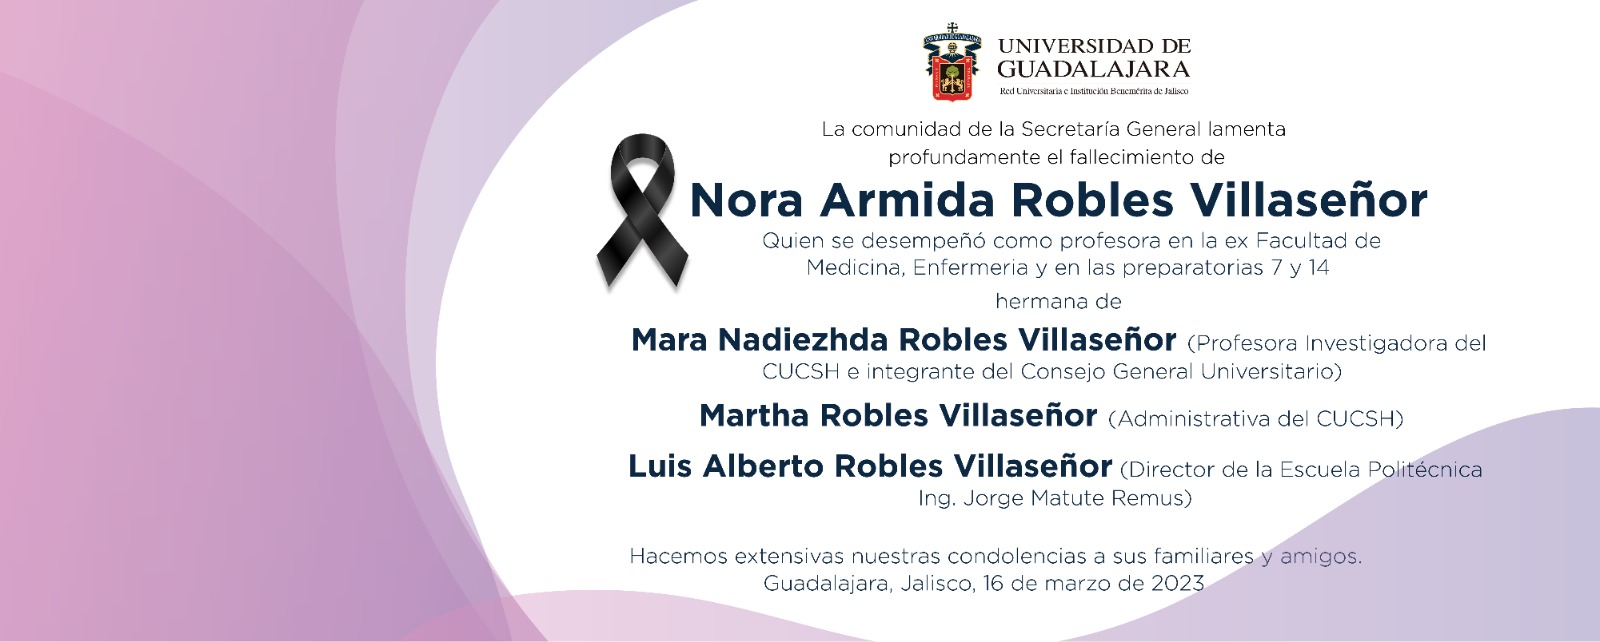 Nora Armida Robles Villaseñor